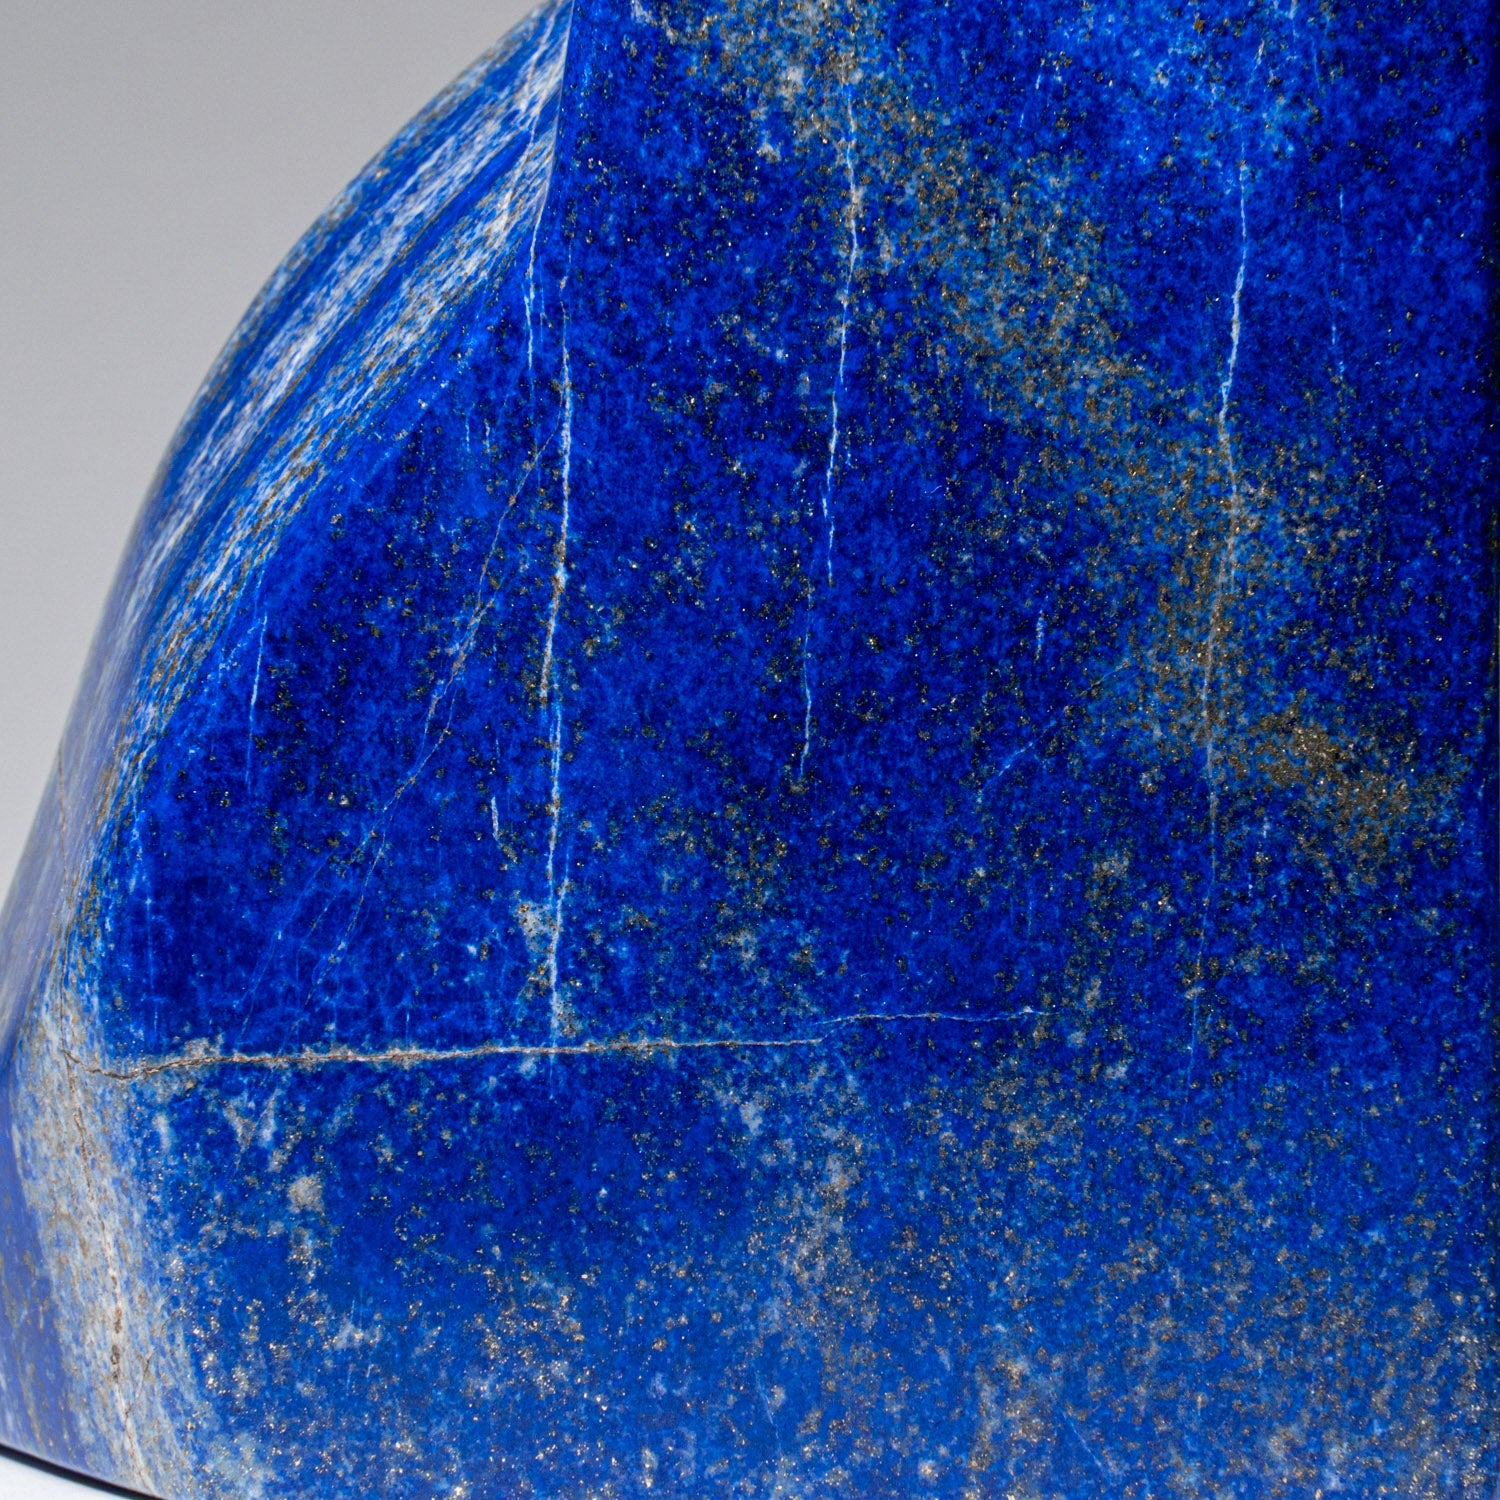 Genuine Polished Lapis Lazuli Freeform from Afghanistan (4.5 lbs)